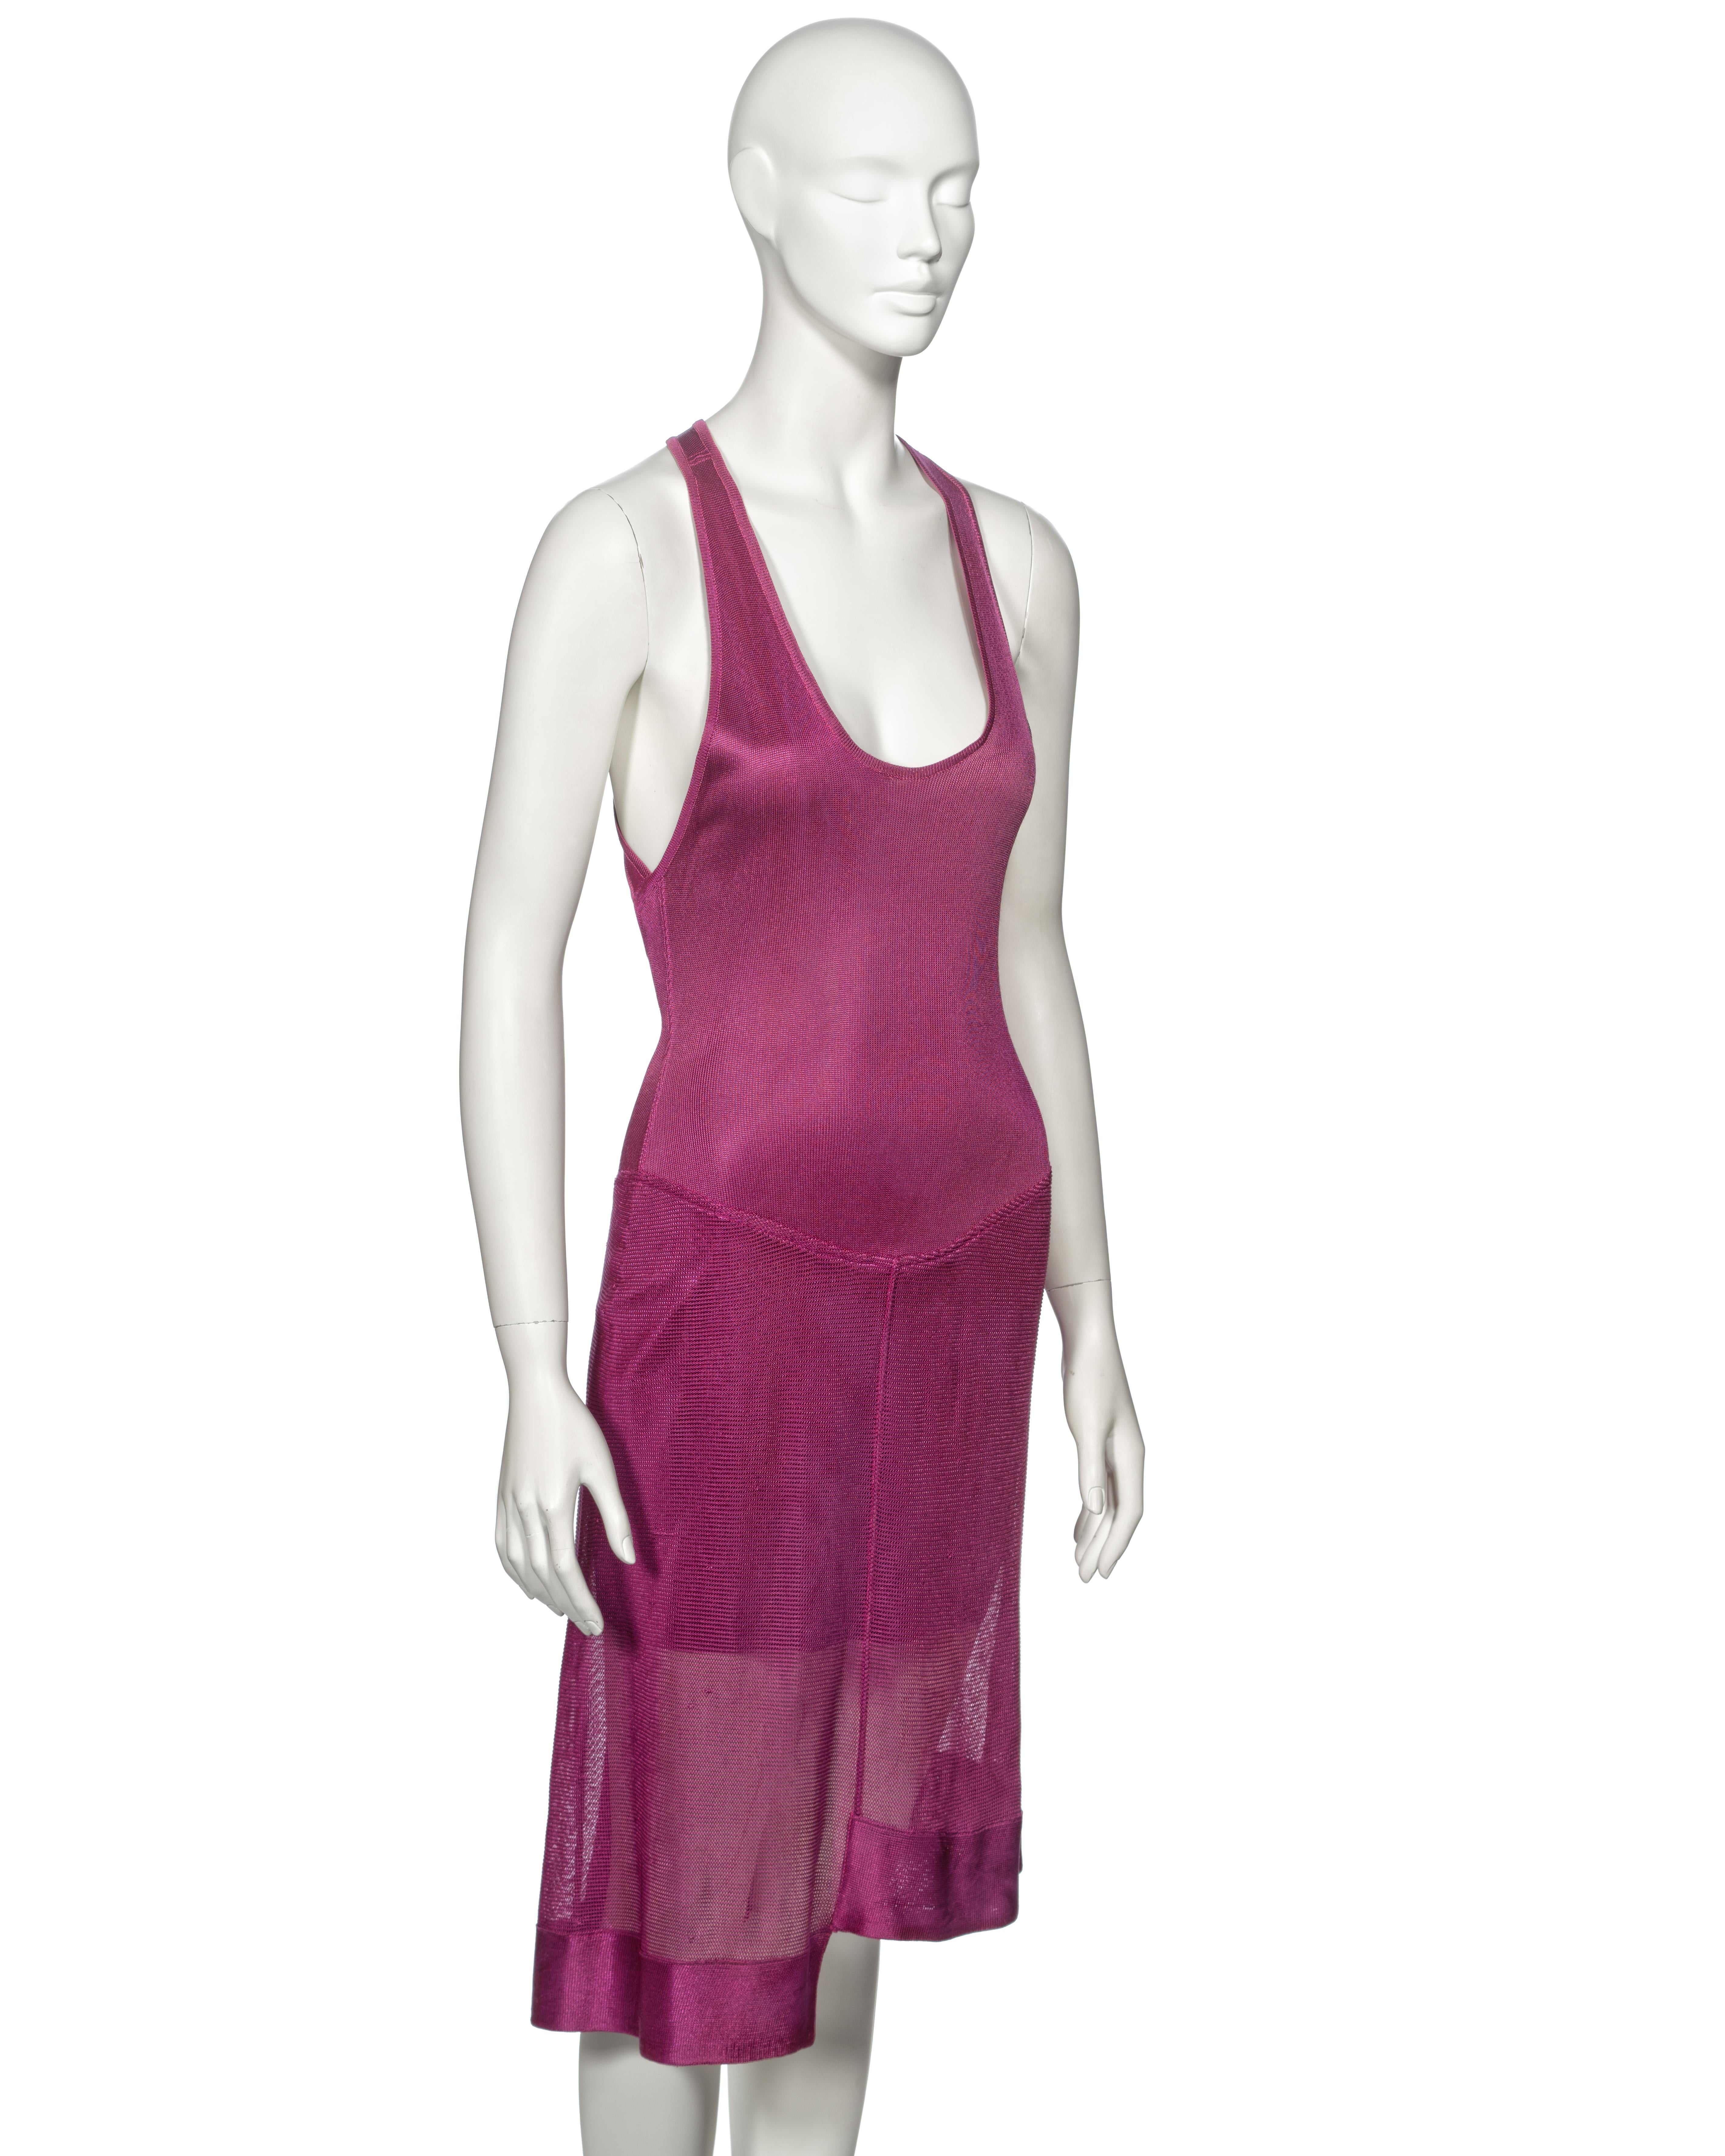 Azzedine Alaia Magenta Acetate Knit Cocktail Dress, ss 1986 For Sale 2